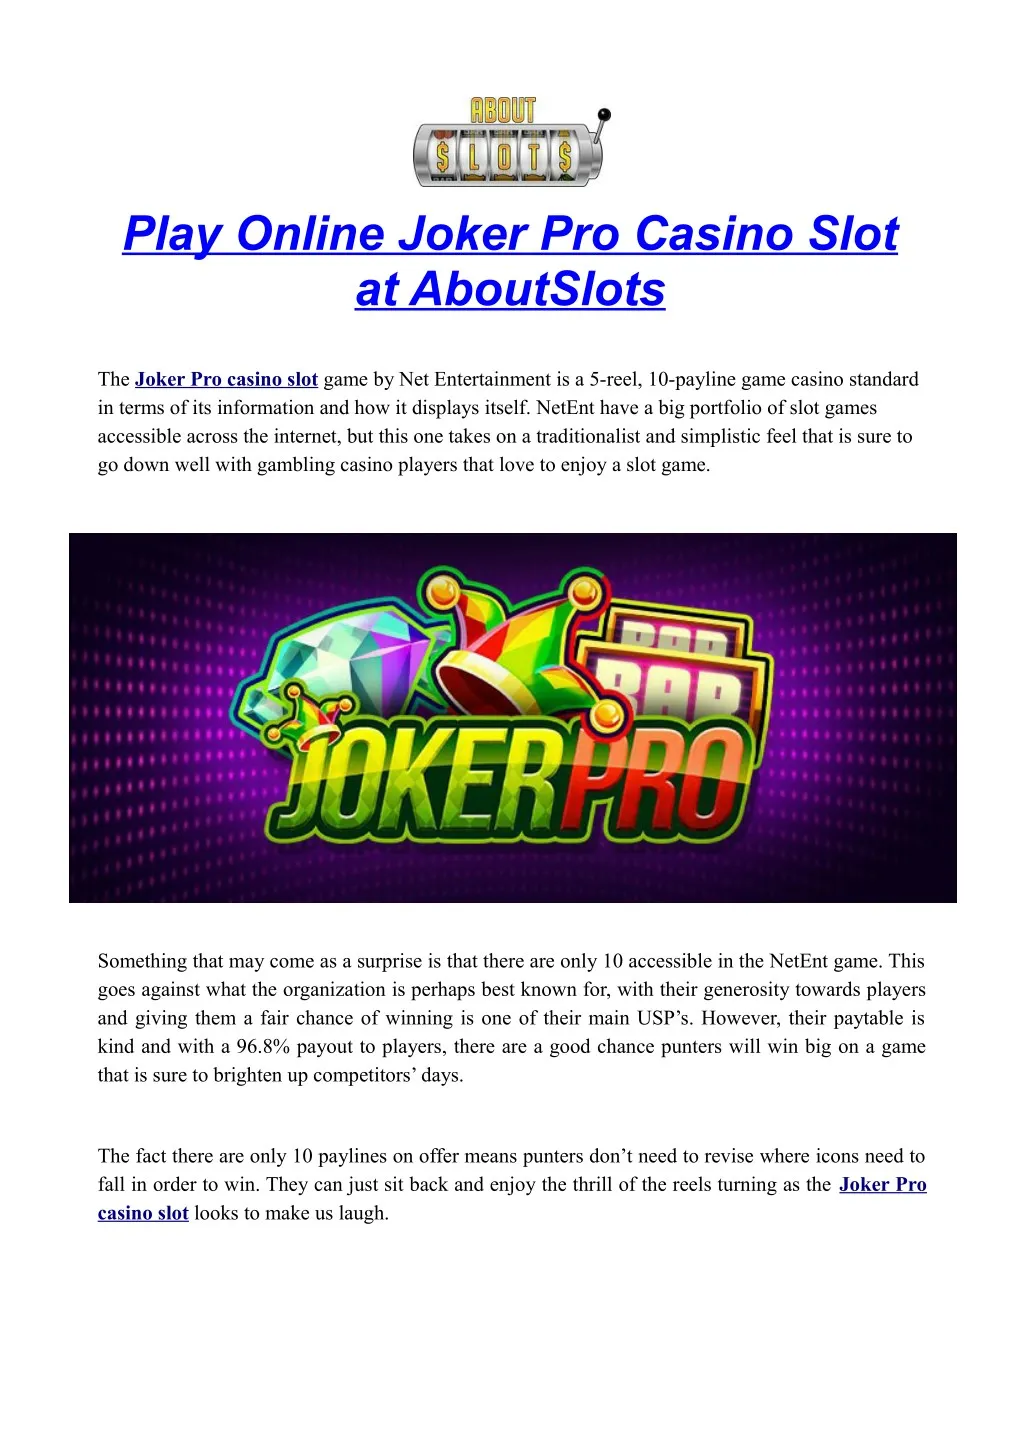 play online joker pro casino slot at aboutslots